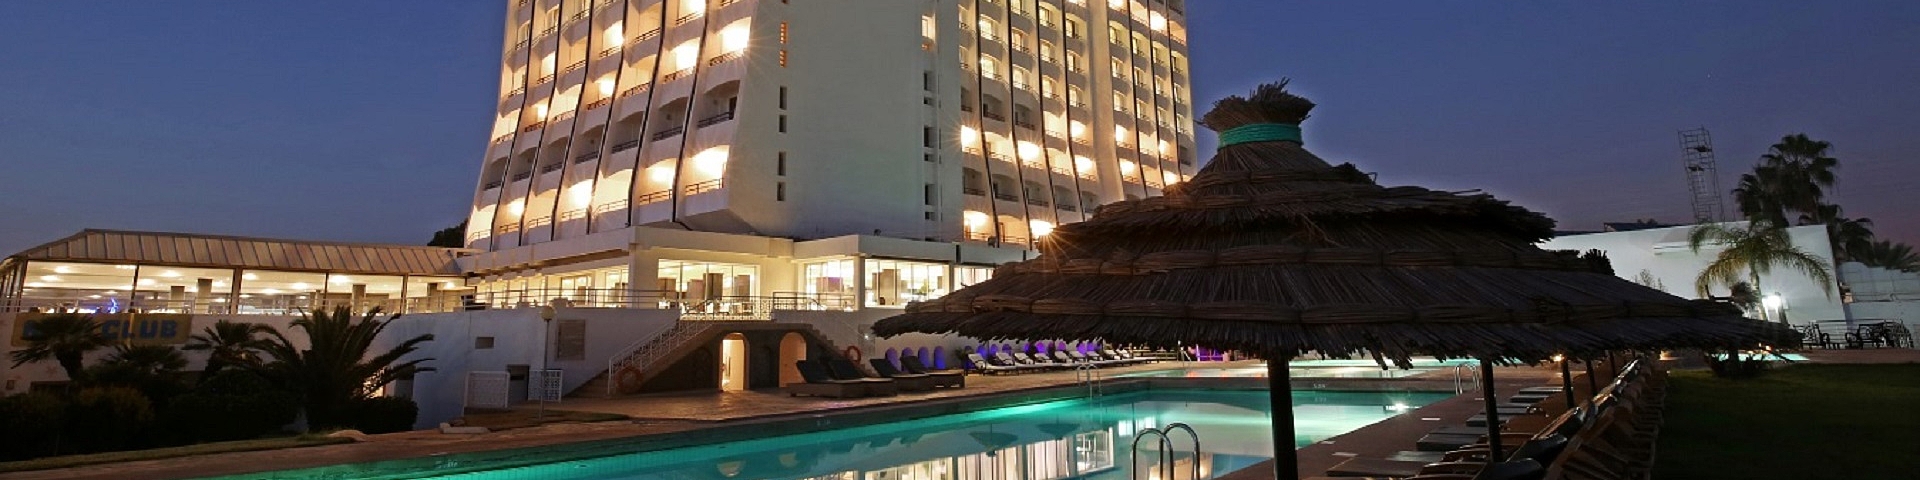 Anezi Tower Hotel | Golf i Agadir